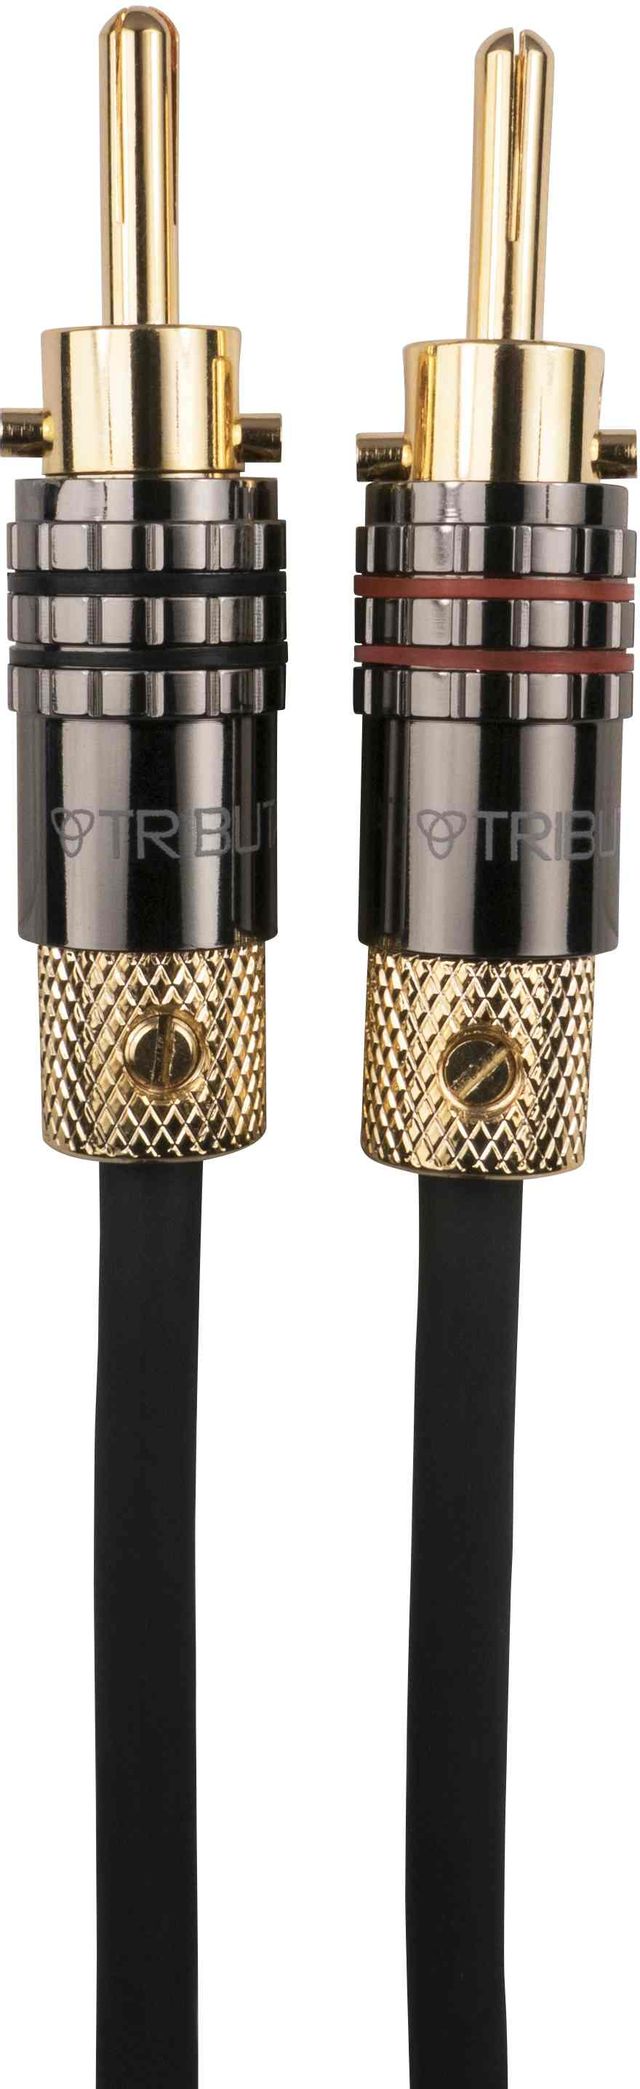 Tributaries® Series 8 12 Ft. Banana Plugs Speaker Cable